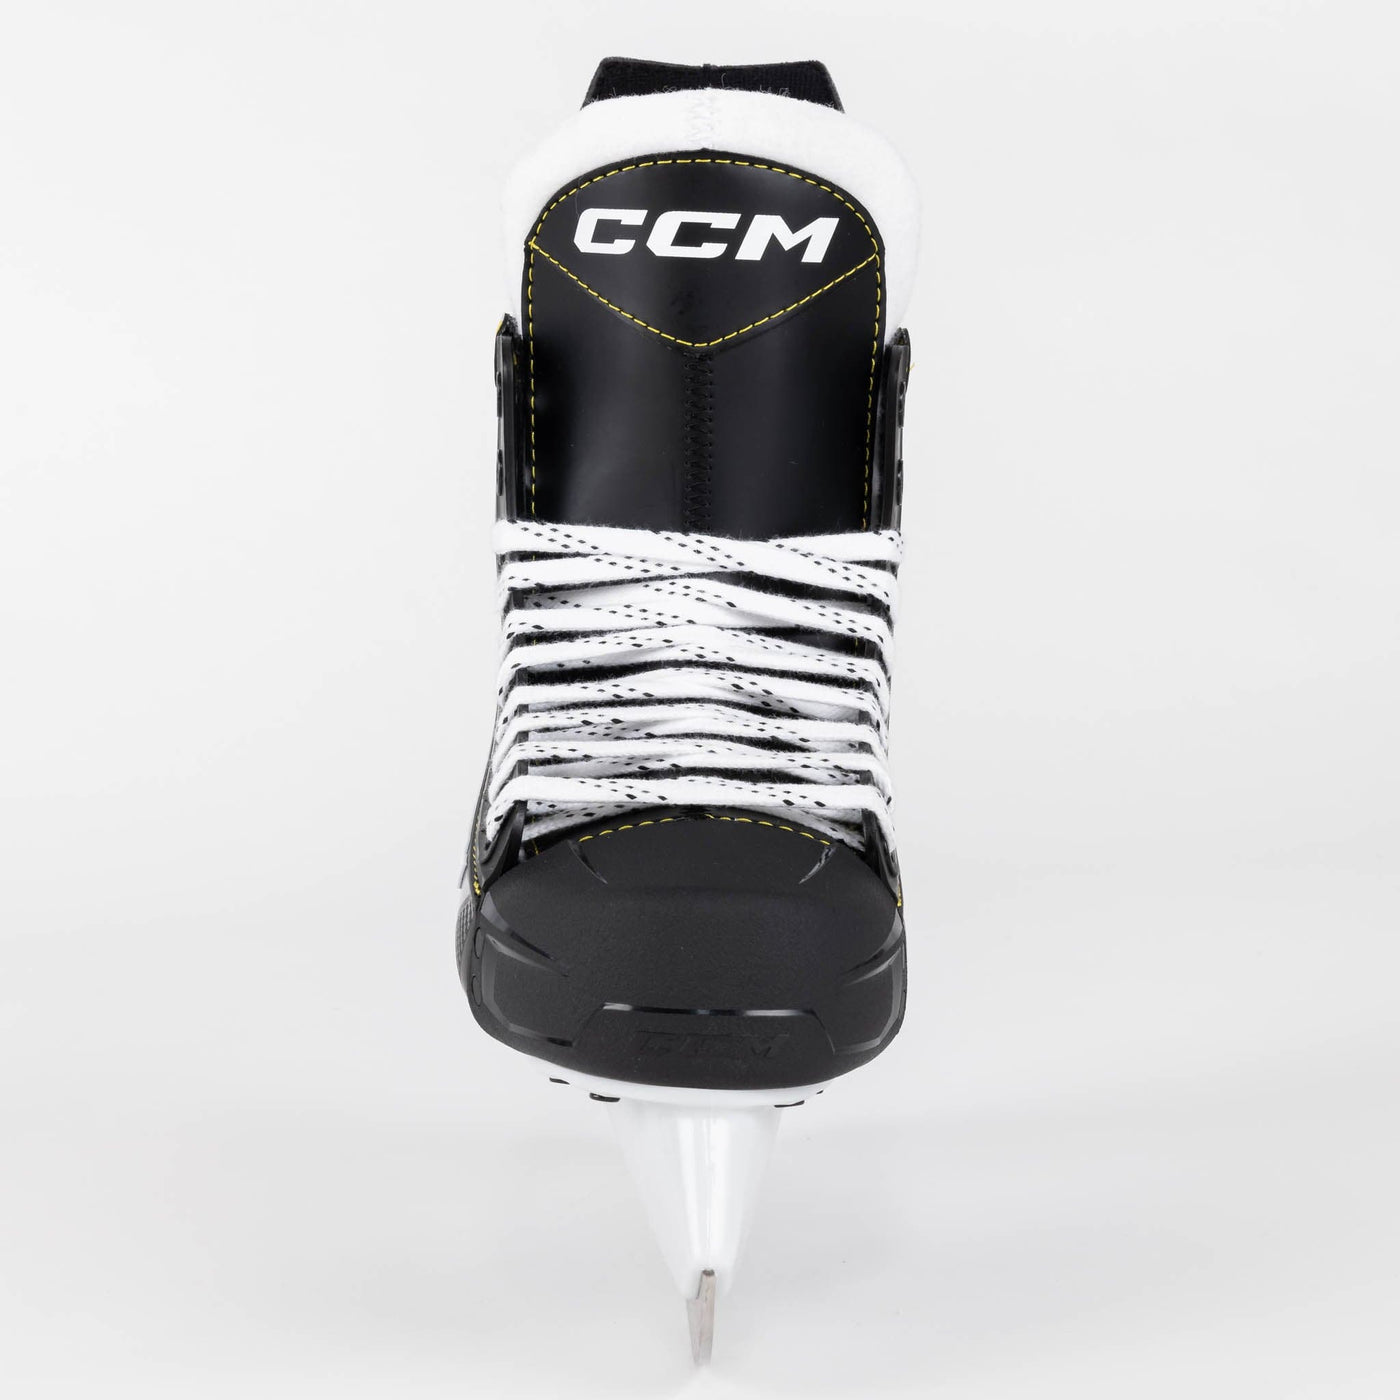 CCM Tacks AS550 Intermediate Hockey Skates - The Hockey Shop Source For Sports